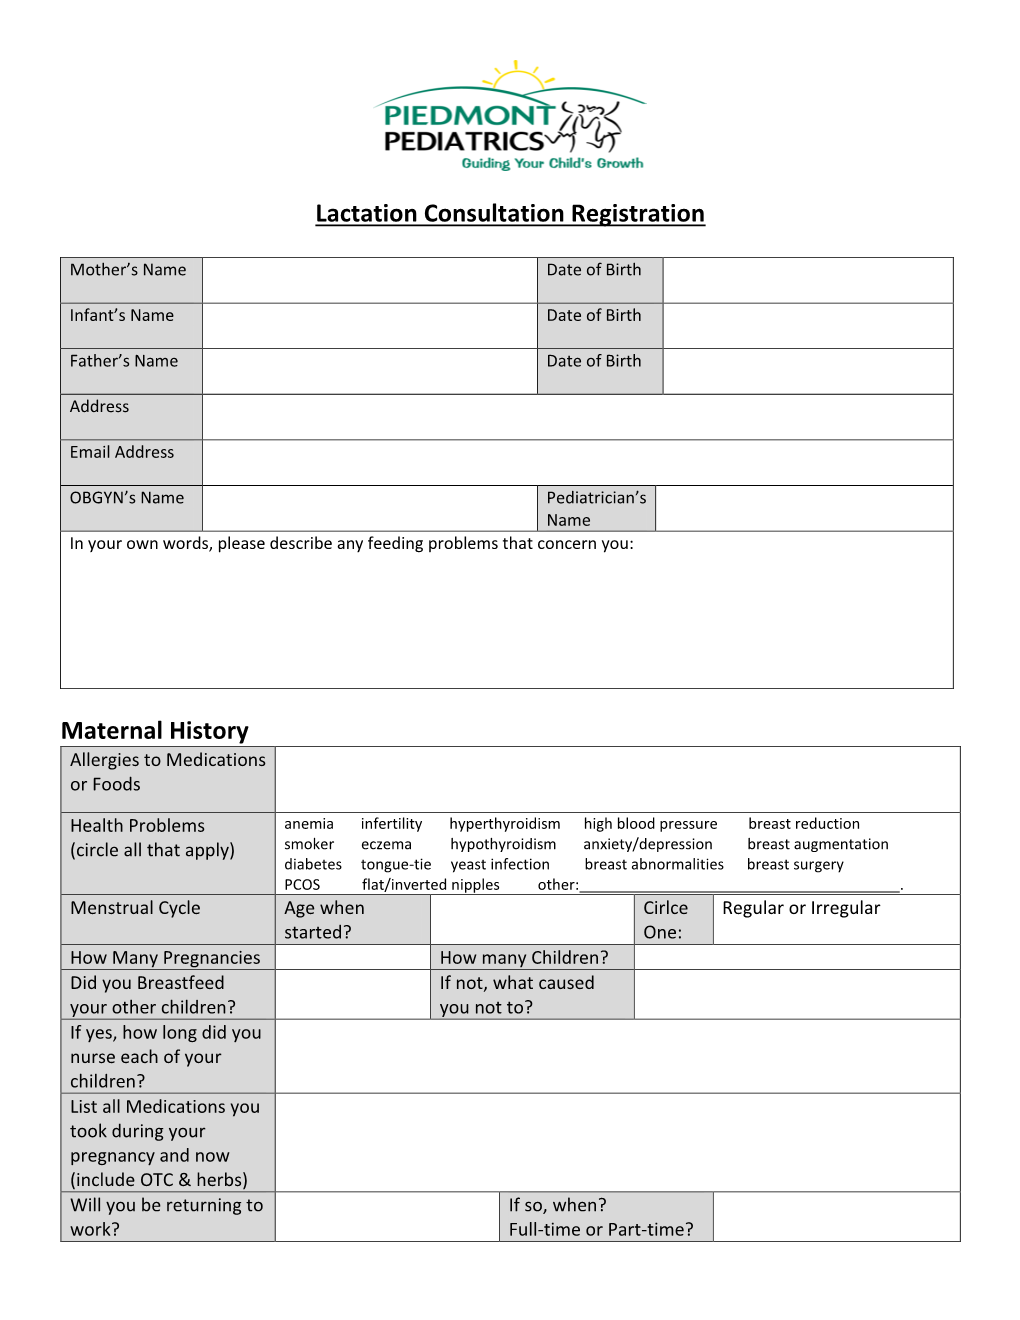 Lactation Consultation Registration